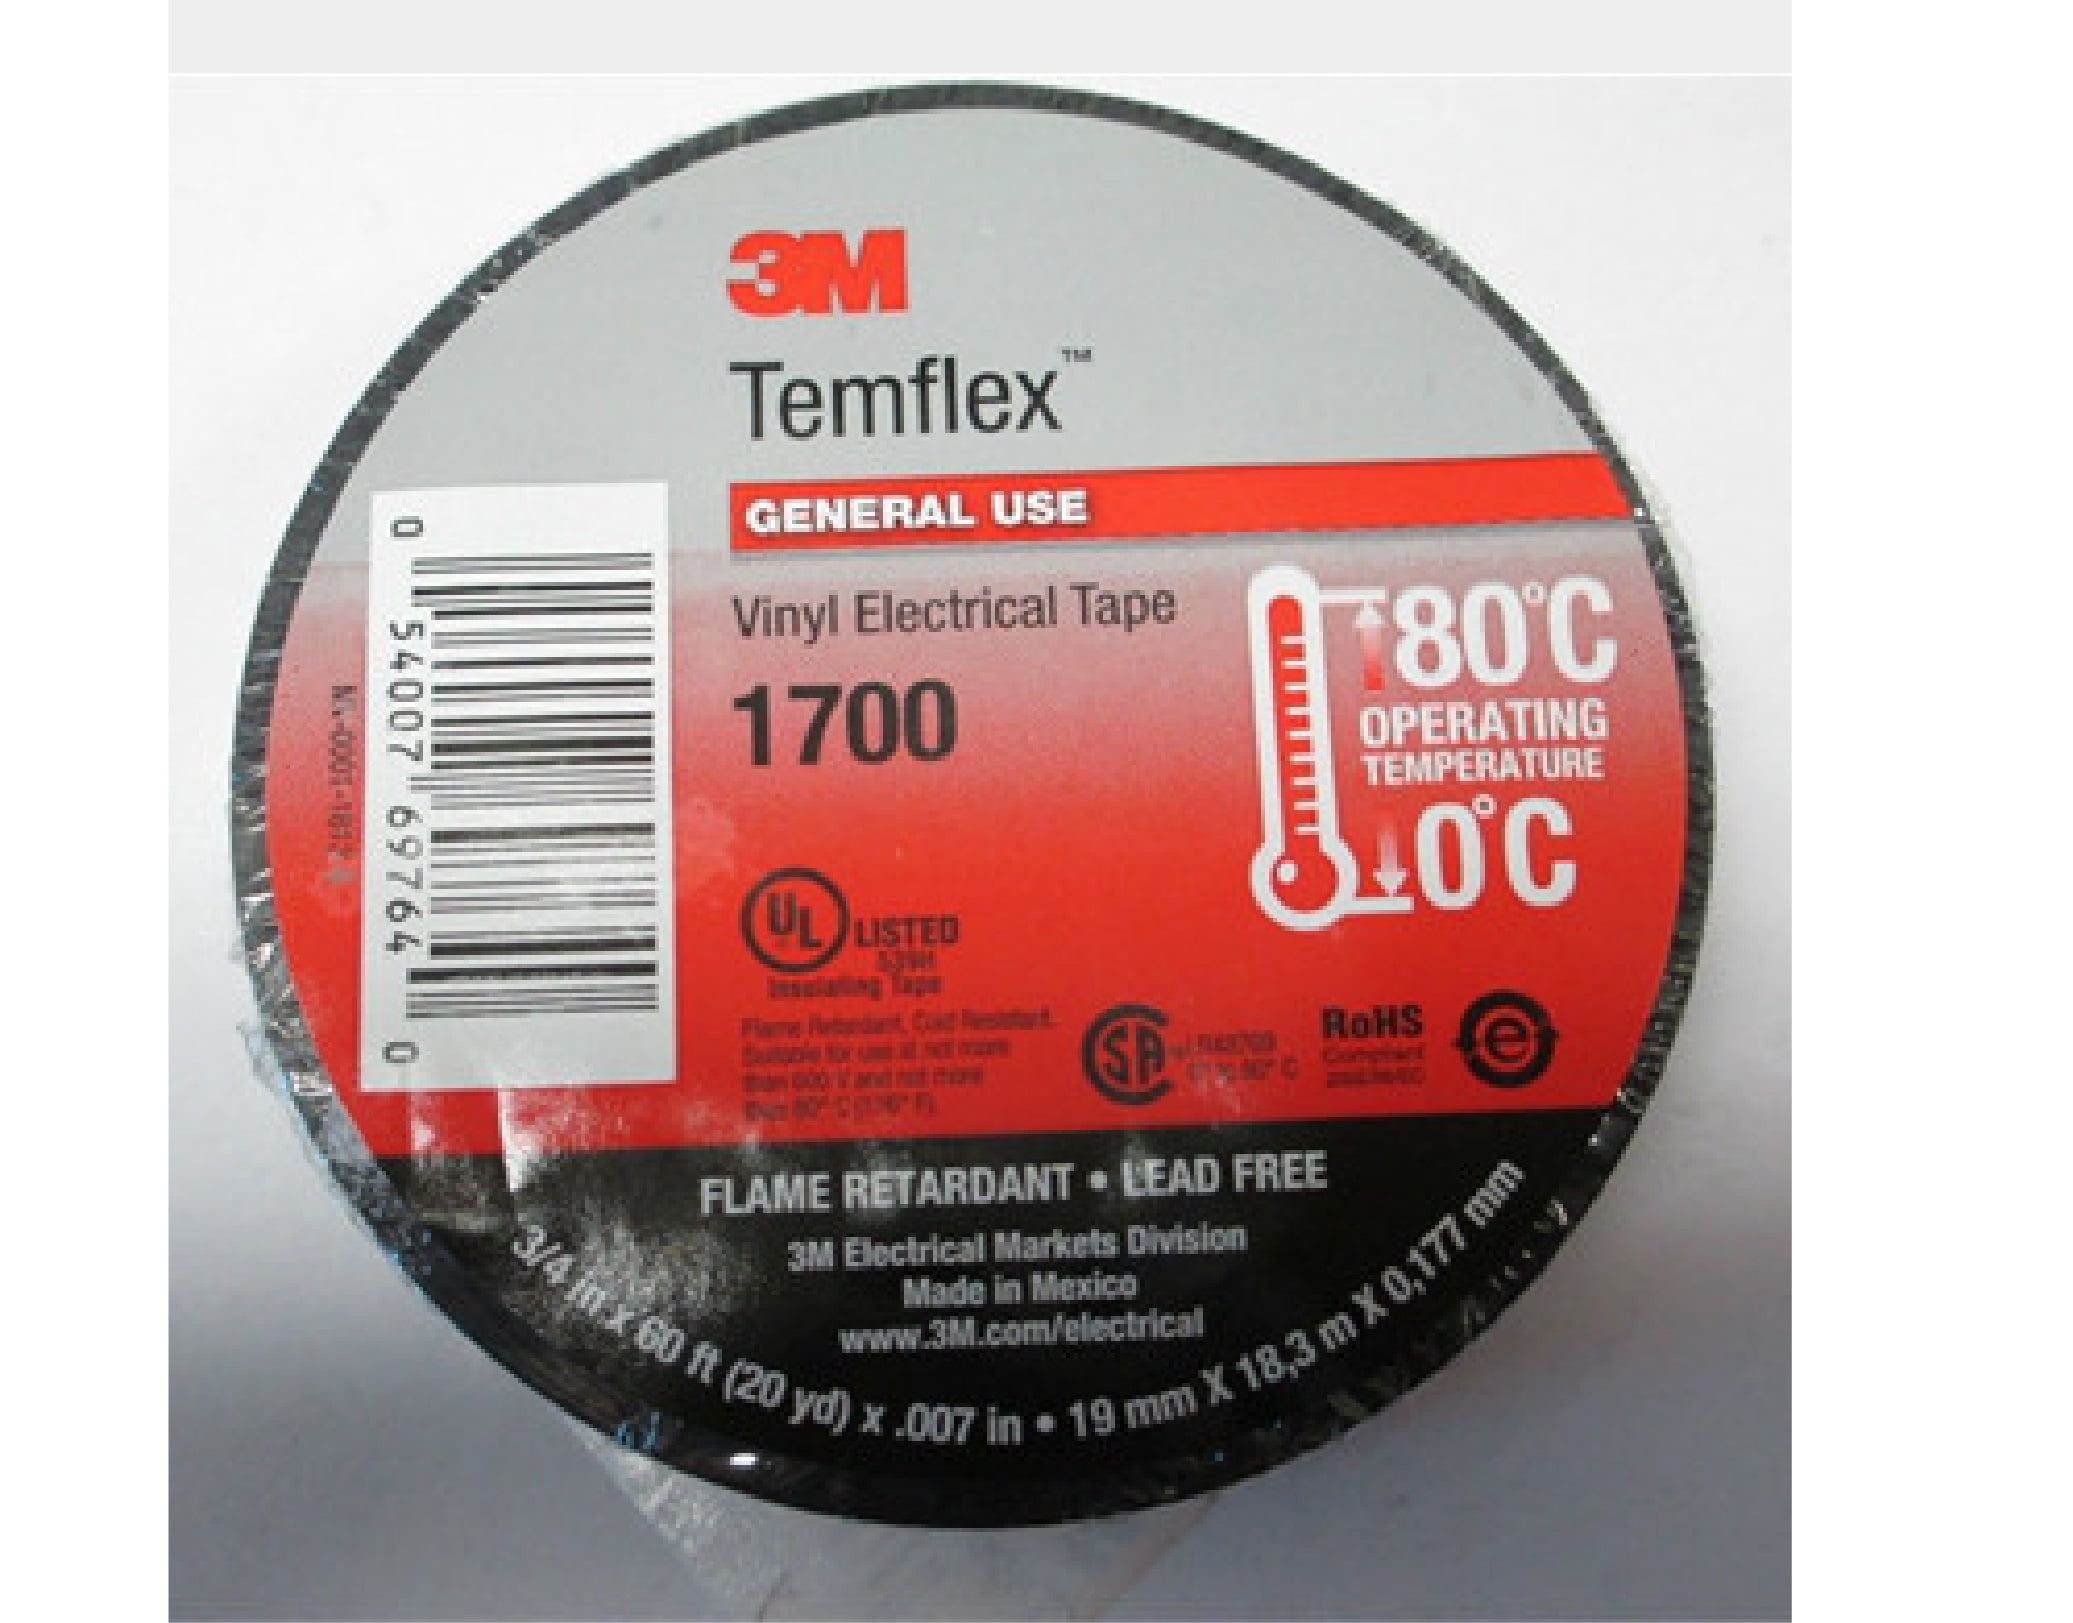 20 ROLLS 3M BLACK ELECTRICAL TAPE TEMFLEX 1700 3/4" X 60 FT Genuine 